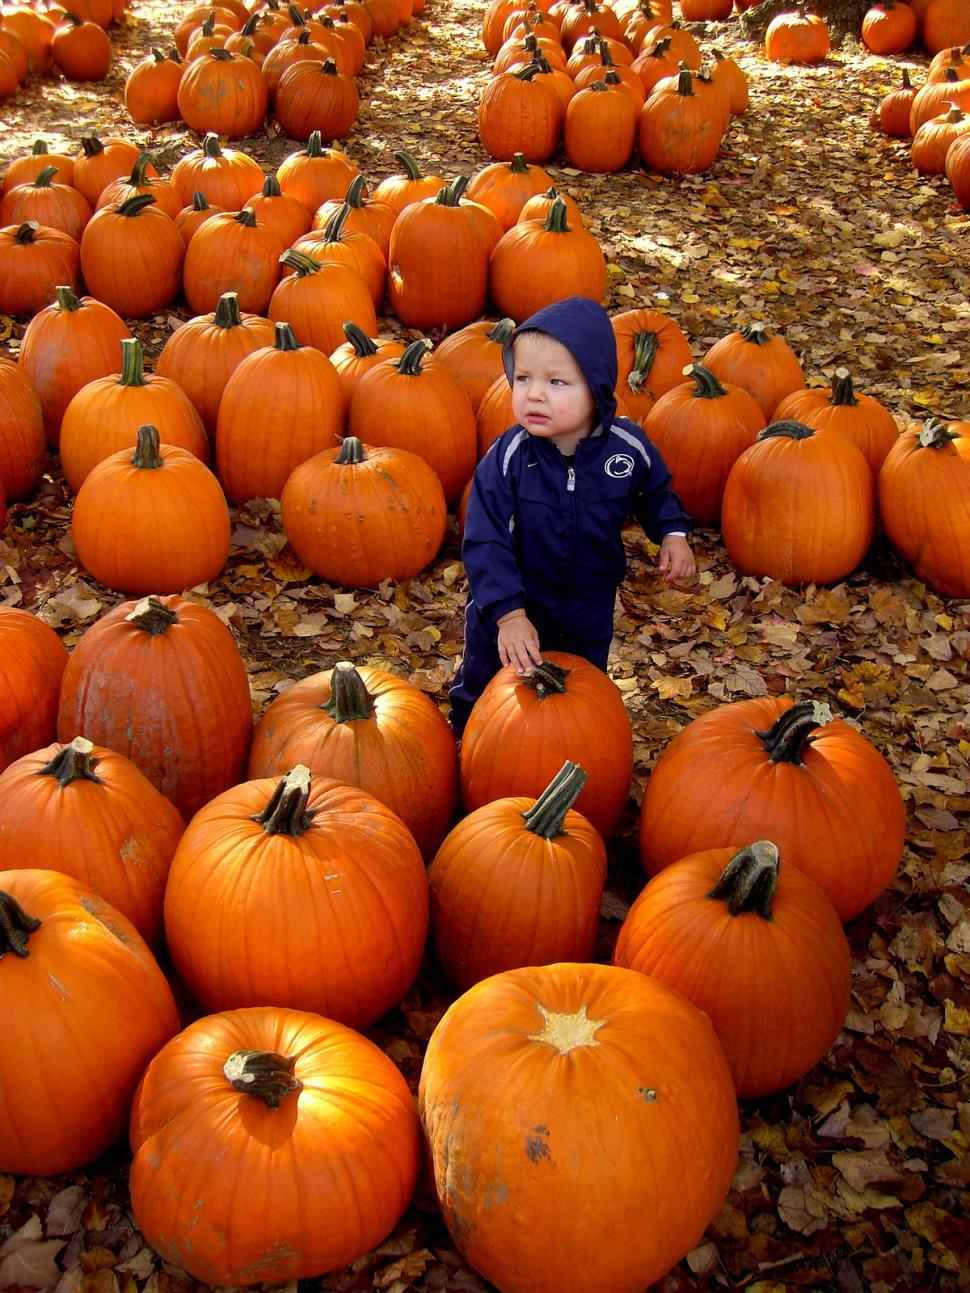 Free Image of Little Boy Standing in Field of Pumpkins 